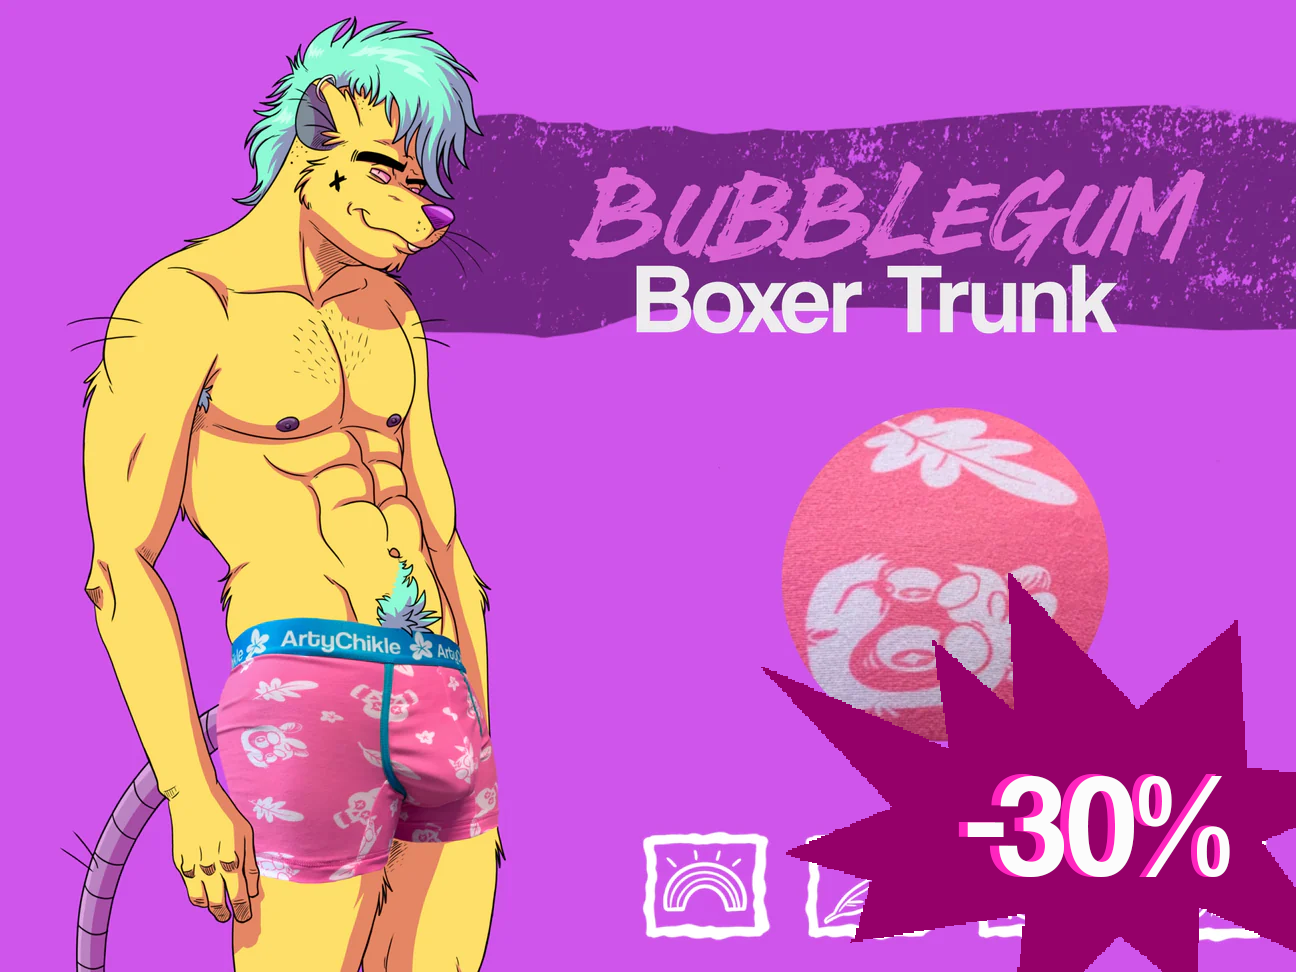 BubbleGum Boxer Trunk